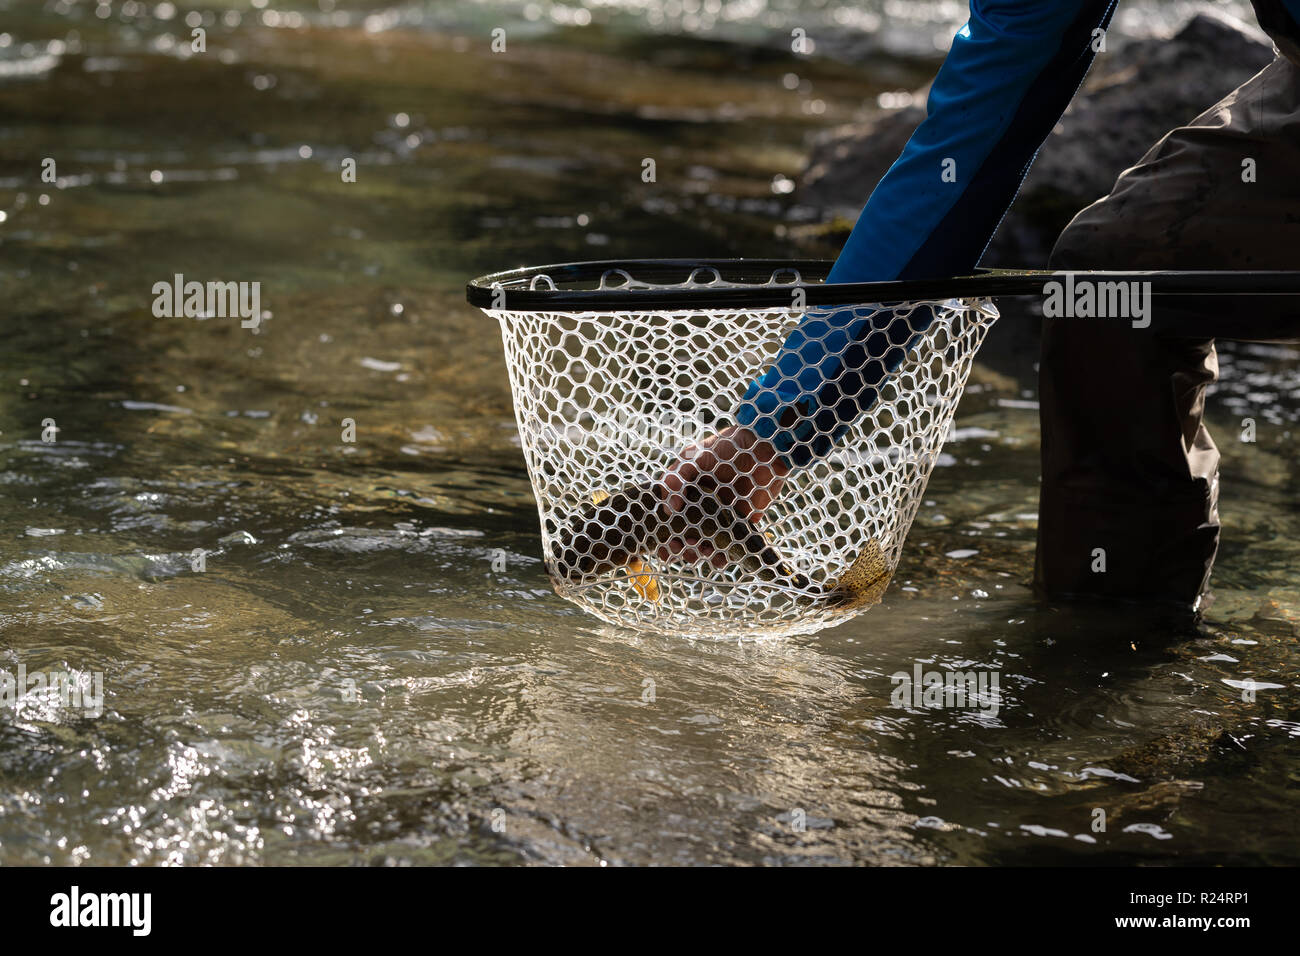 https://c8.alamy.com/comp/R24RP1/fisherman-holding-fish-in-fishing-net-R24RP1.jpg